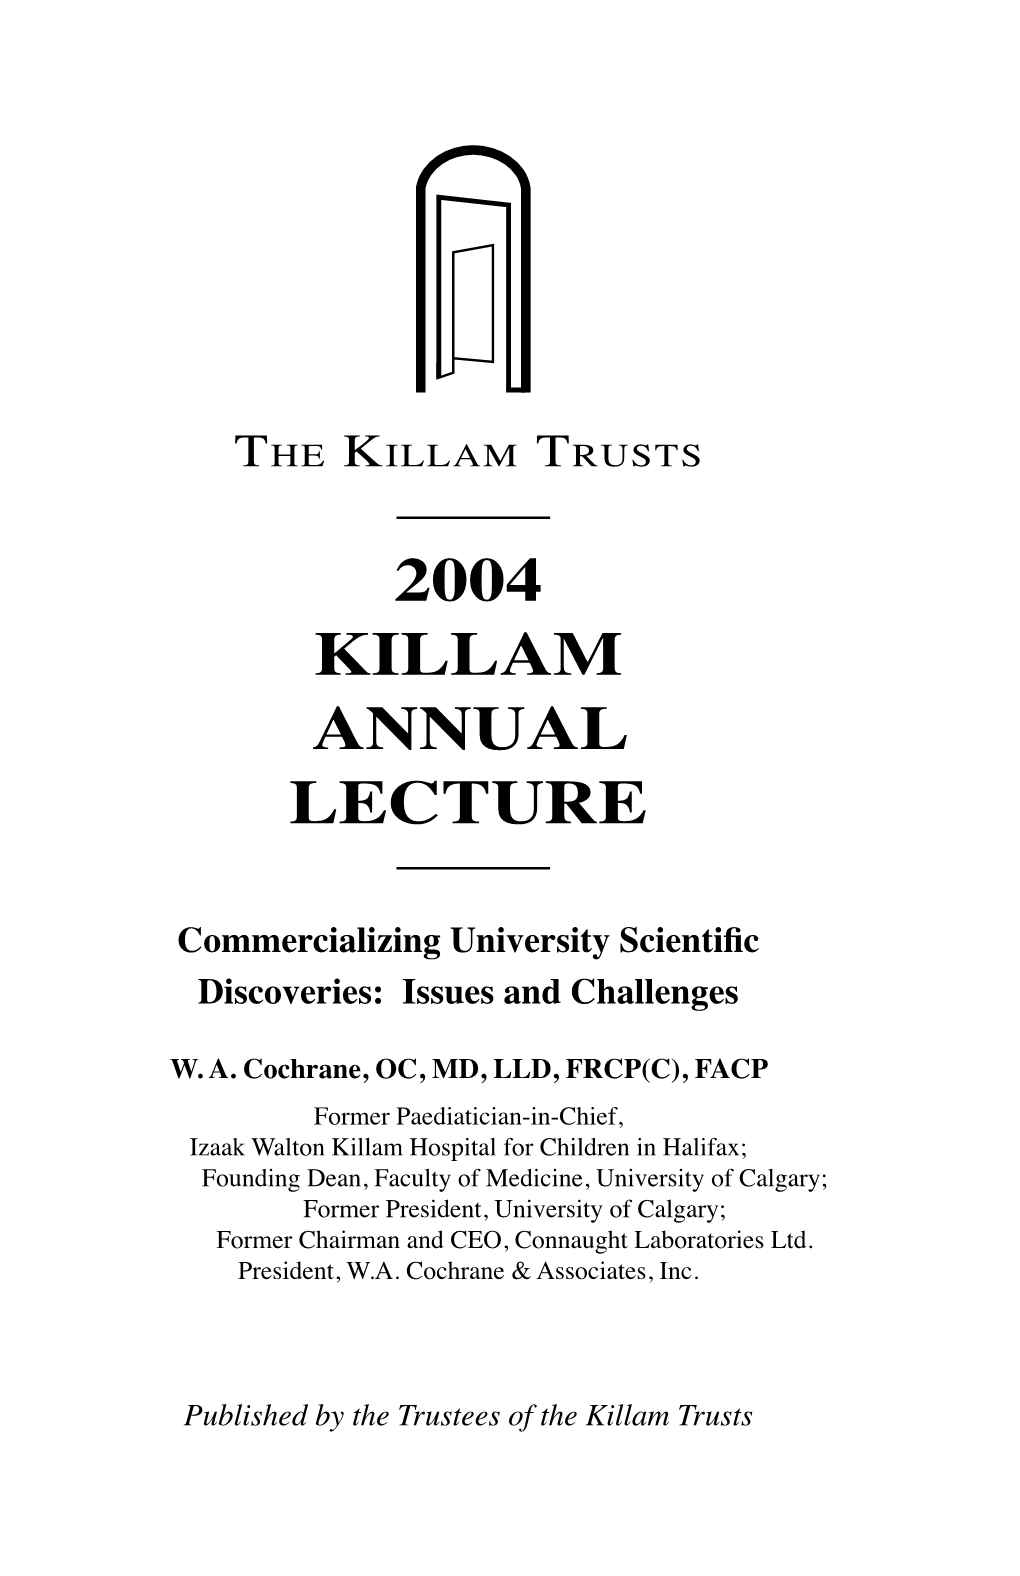 The 2004 Killam Lecture Commercializing University Scientific